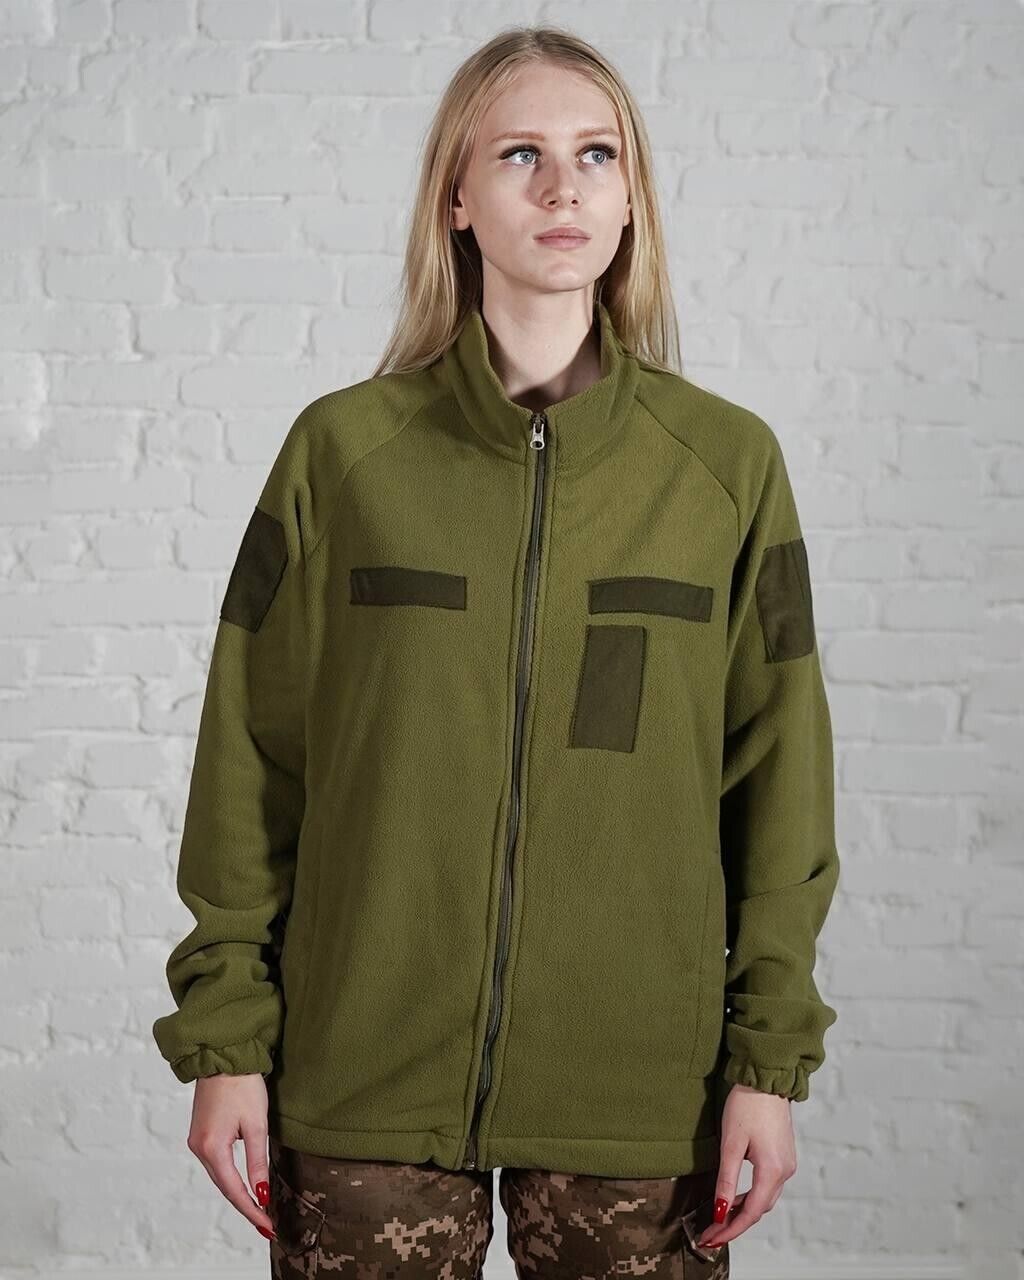 Women's fleece jacket olive army military fleece assault warm comfortable